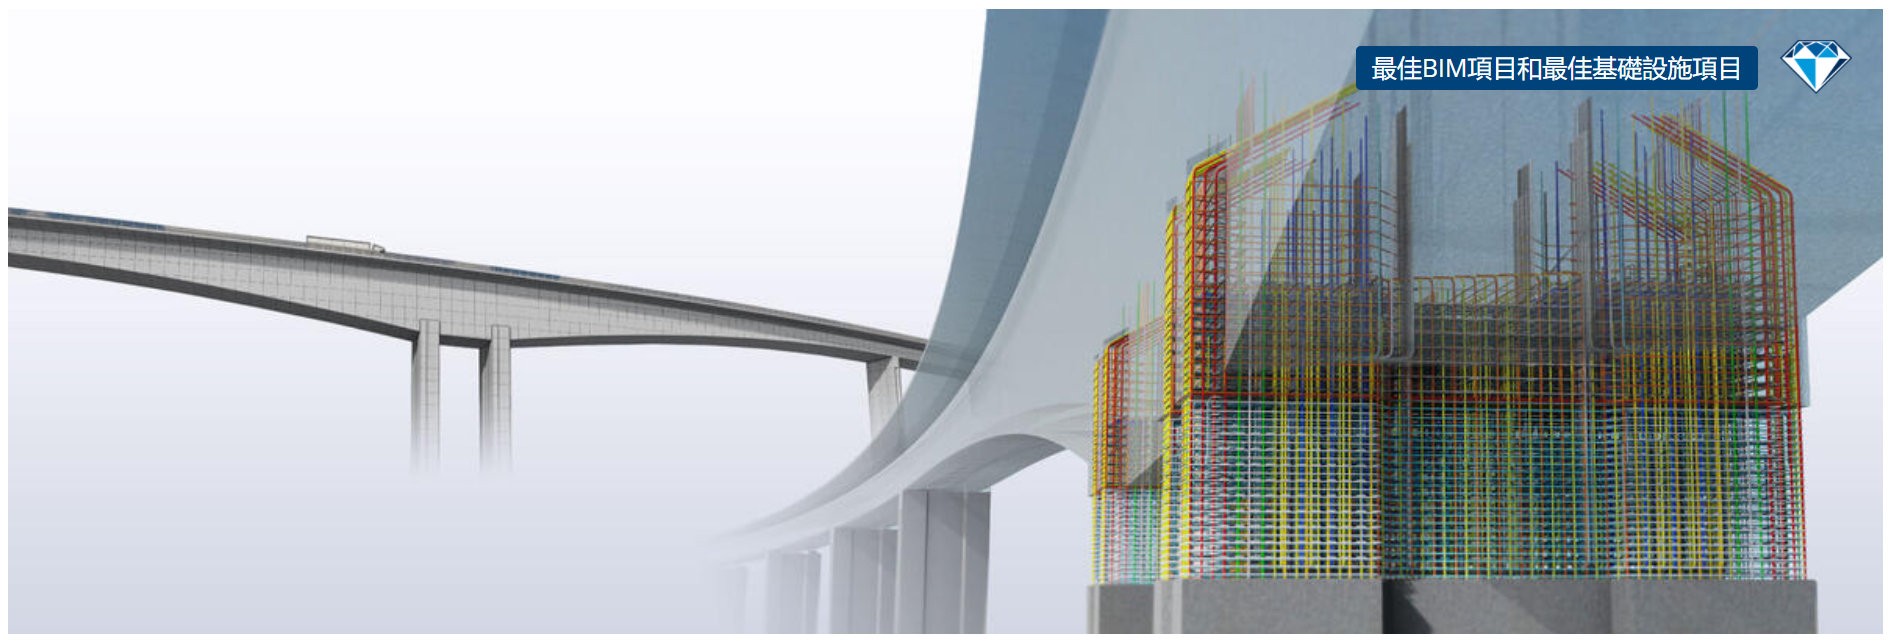 201208015424_5fcf1510148ed.jpg - 世界第一座不需CAD圖紙建造的橋樑